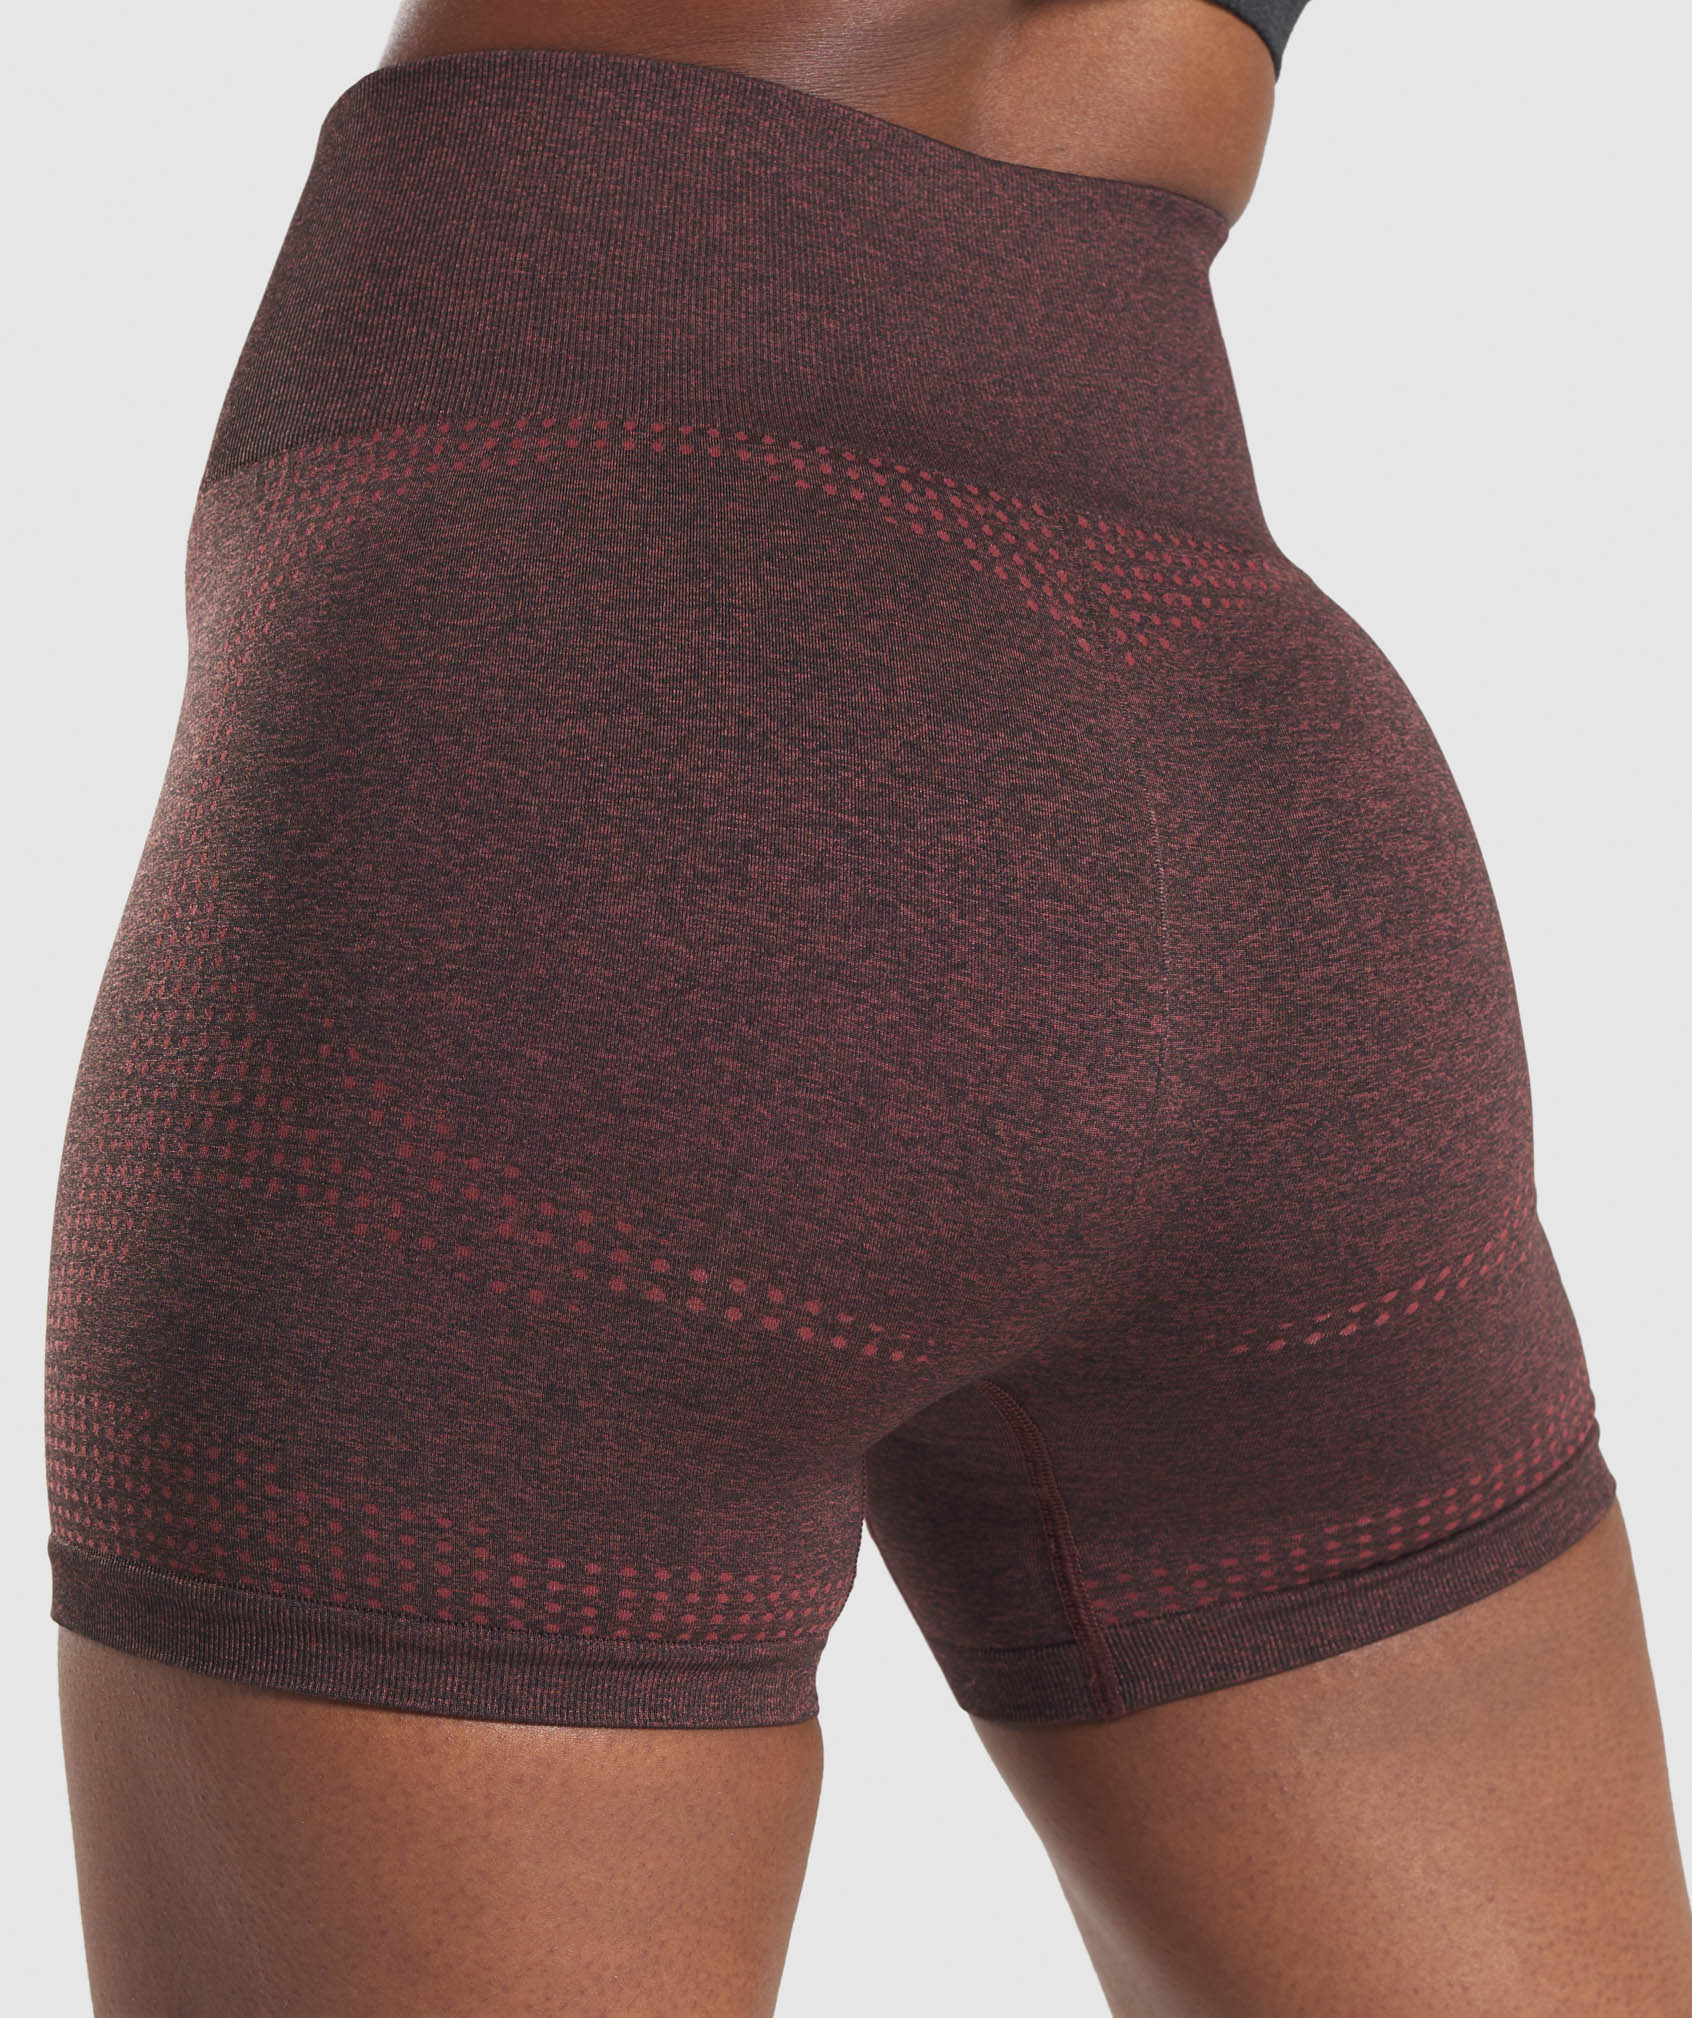 Vital Seamless Shorts in Brown Marl